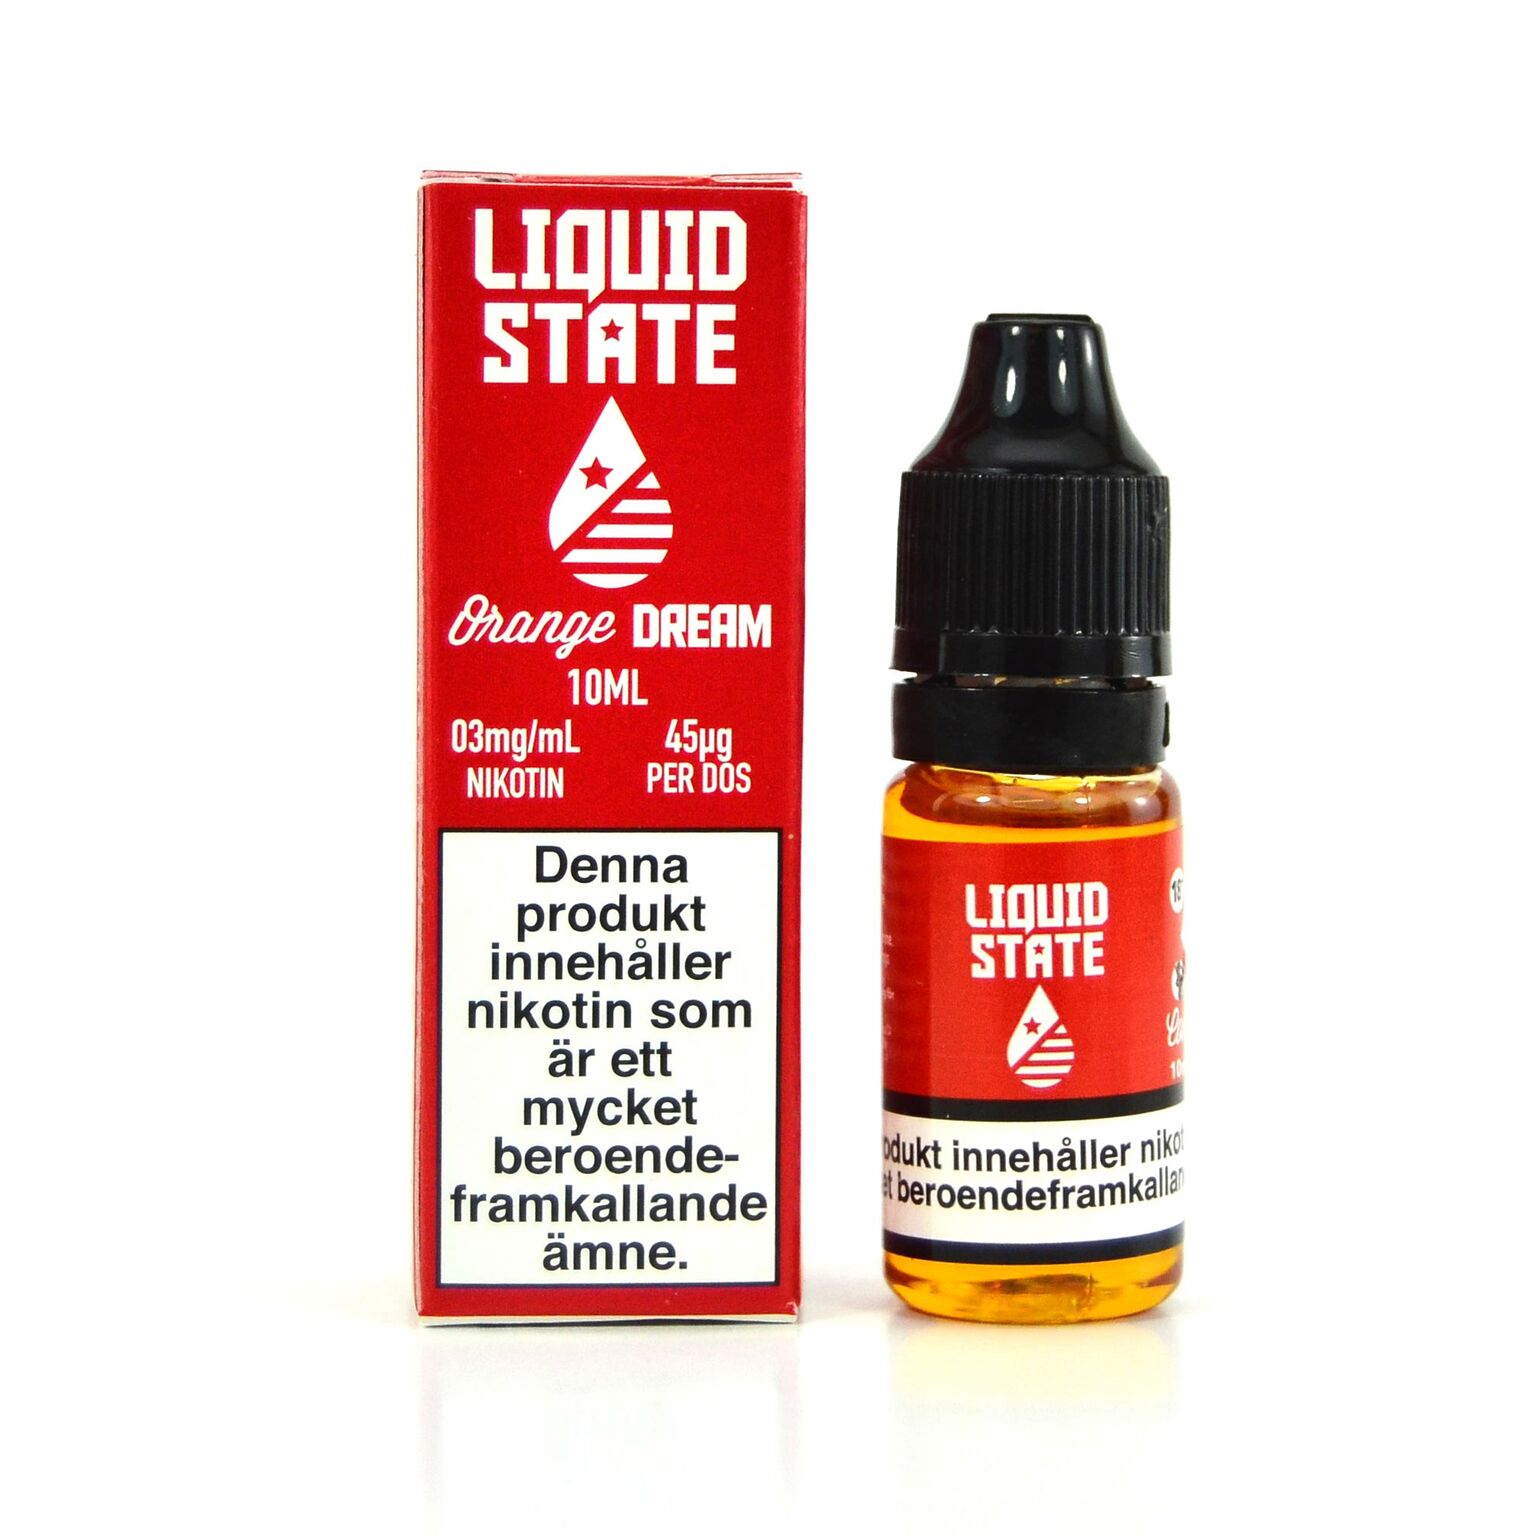 Liquid State Orange Dream ejuice with nicotine